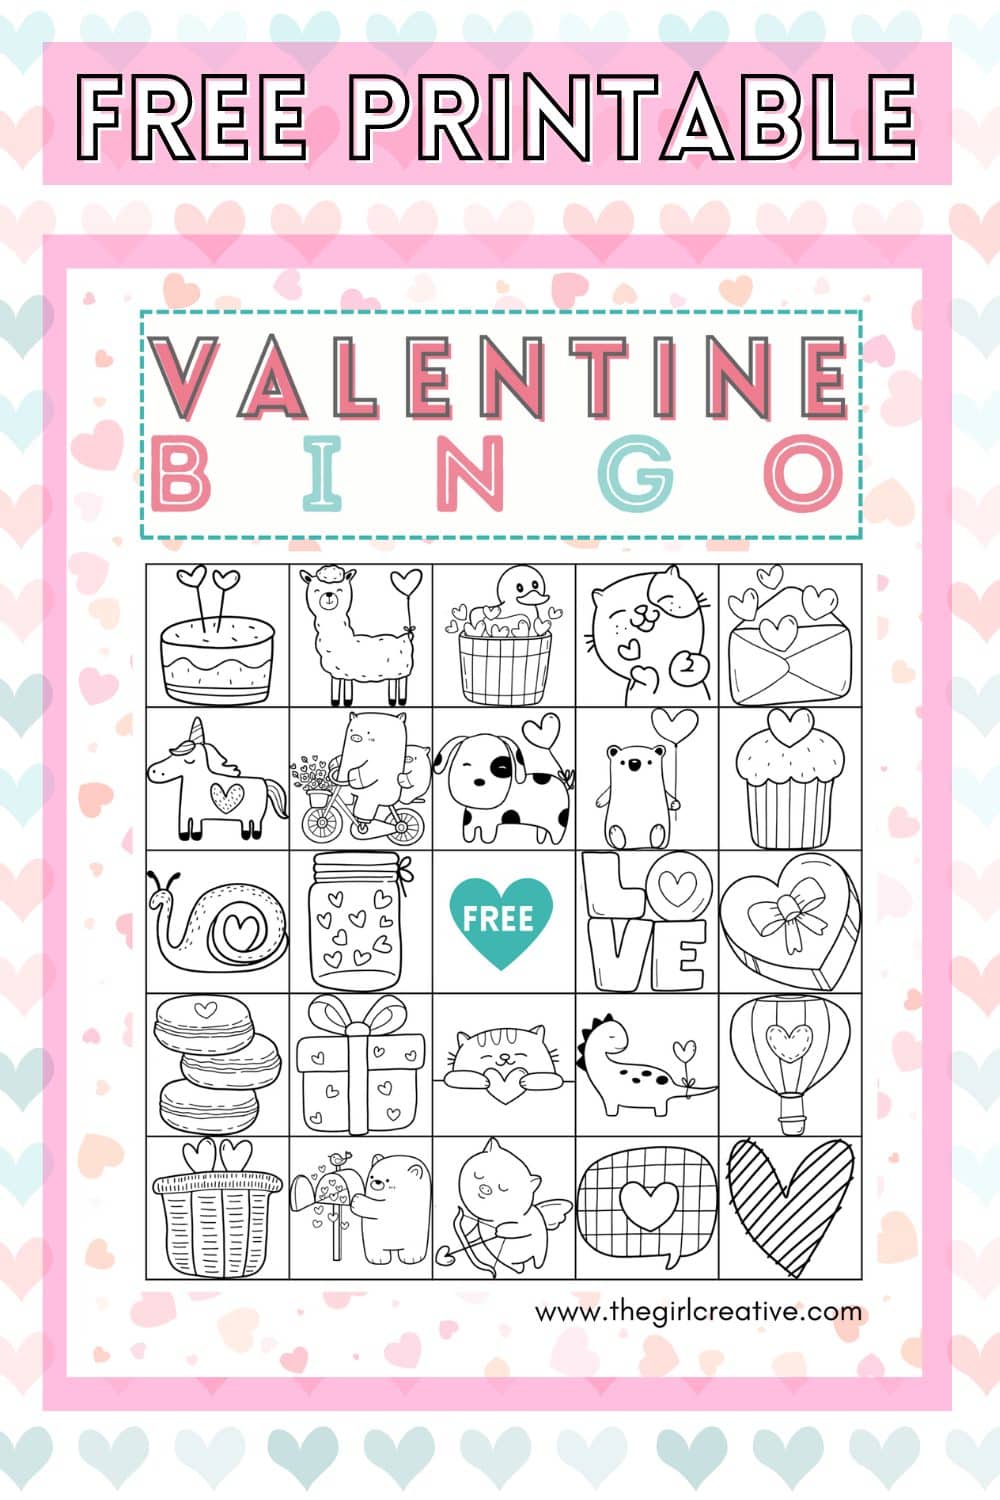 Bingo Game Card for Valentine's Day Fun